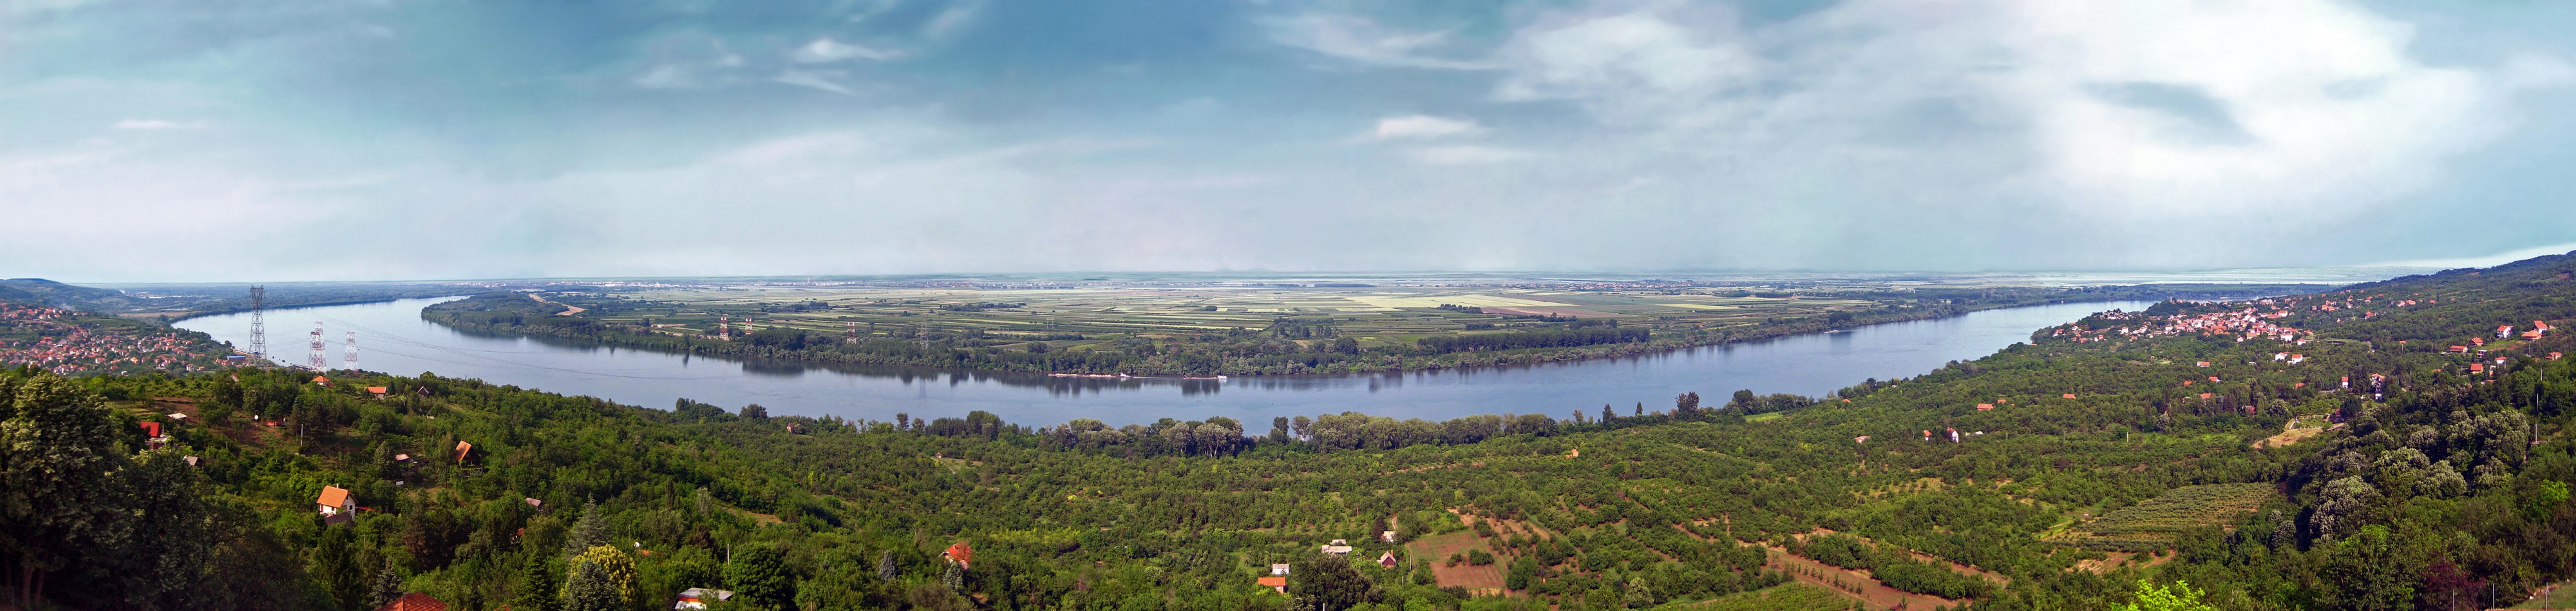 Danube in Ritopek, Serbia